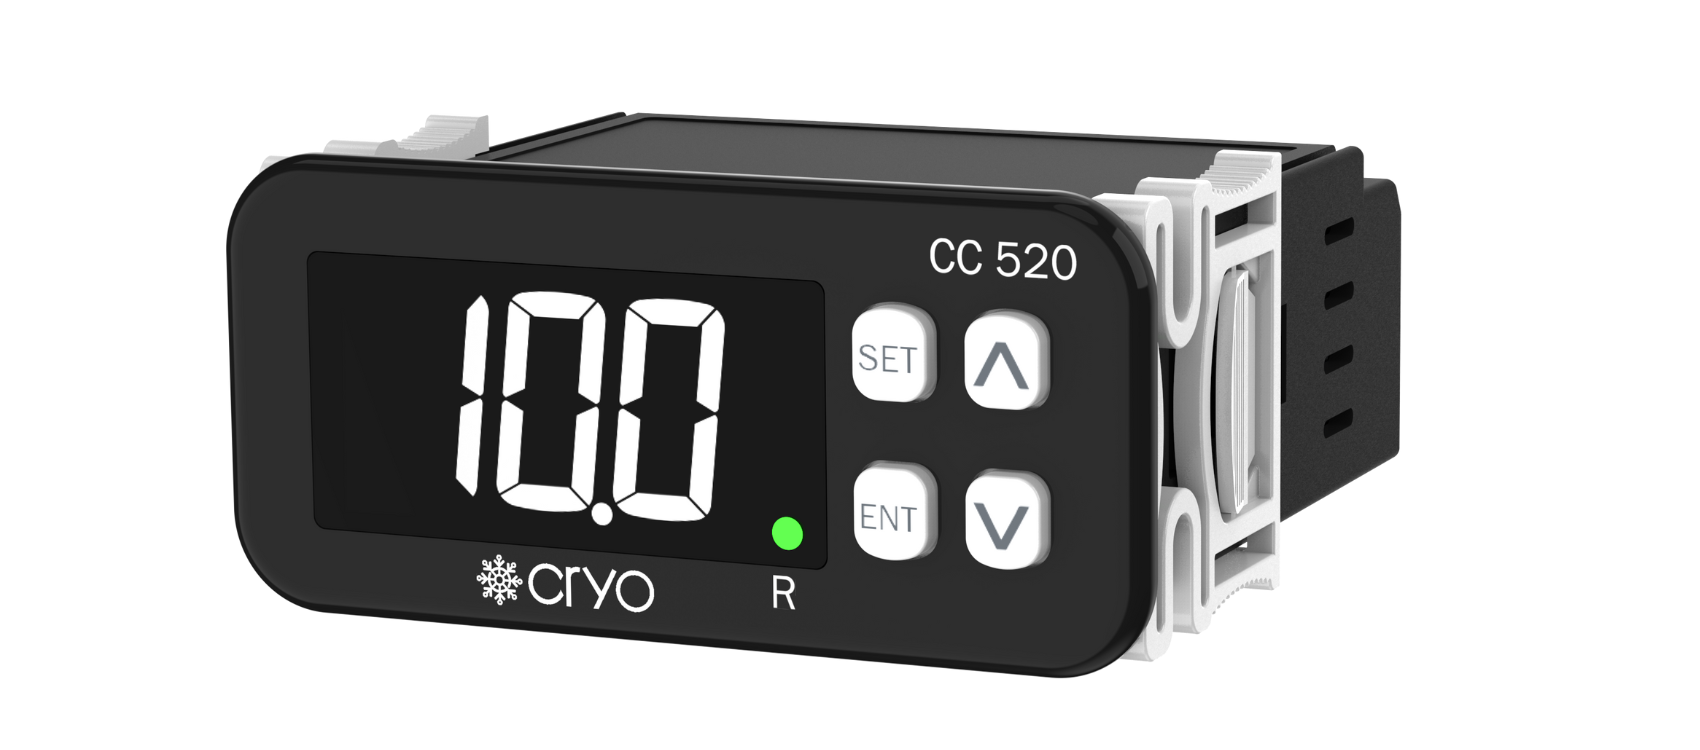 CC-520 Cryo 20A Single Output - product image